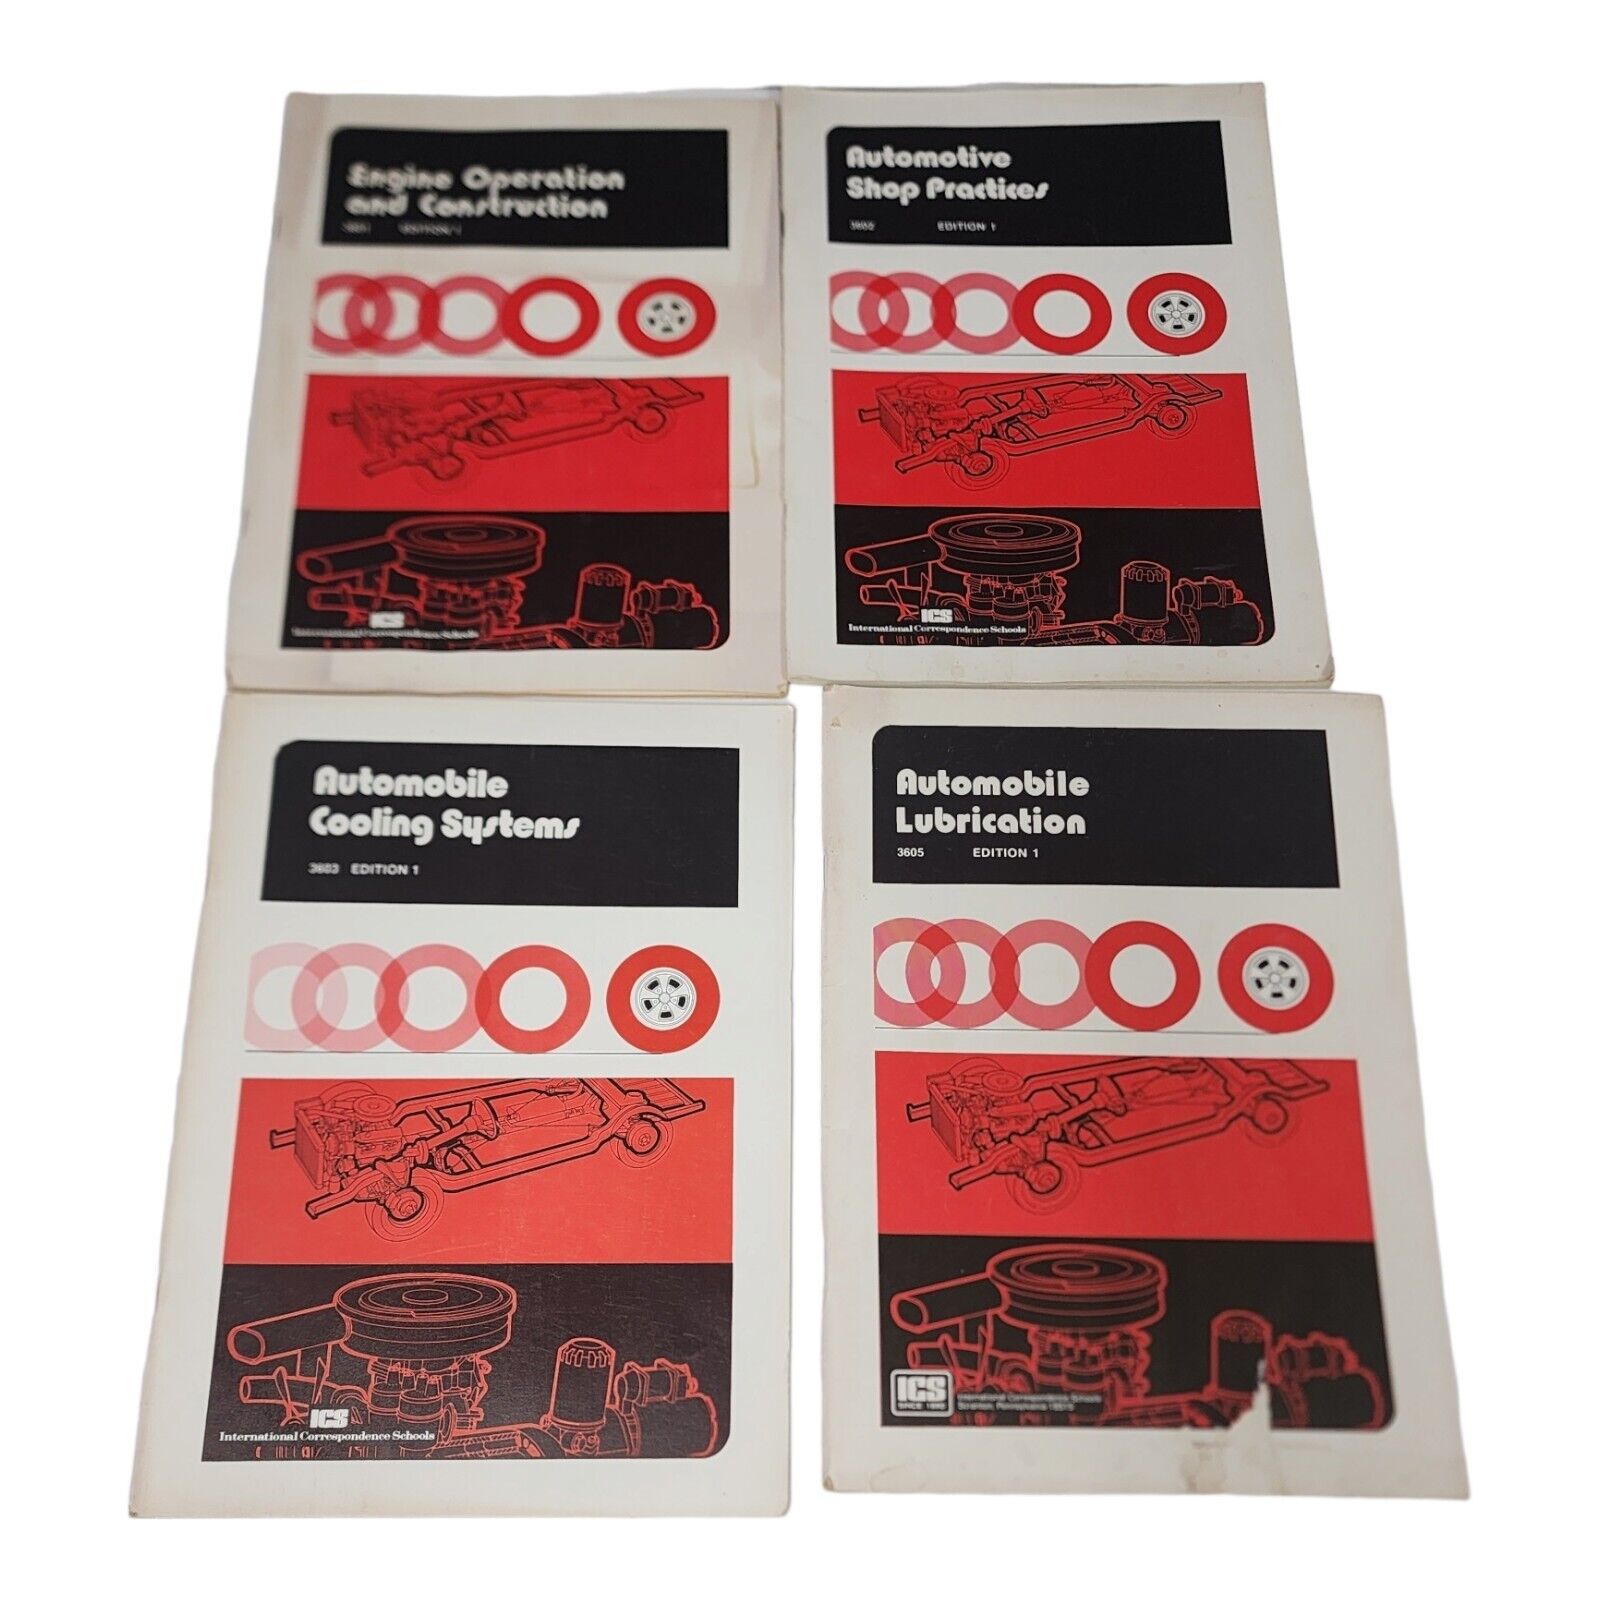 Vtg 1970s Car Repair Manuals Mechanics Reference Books Automotive Restoration